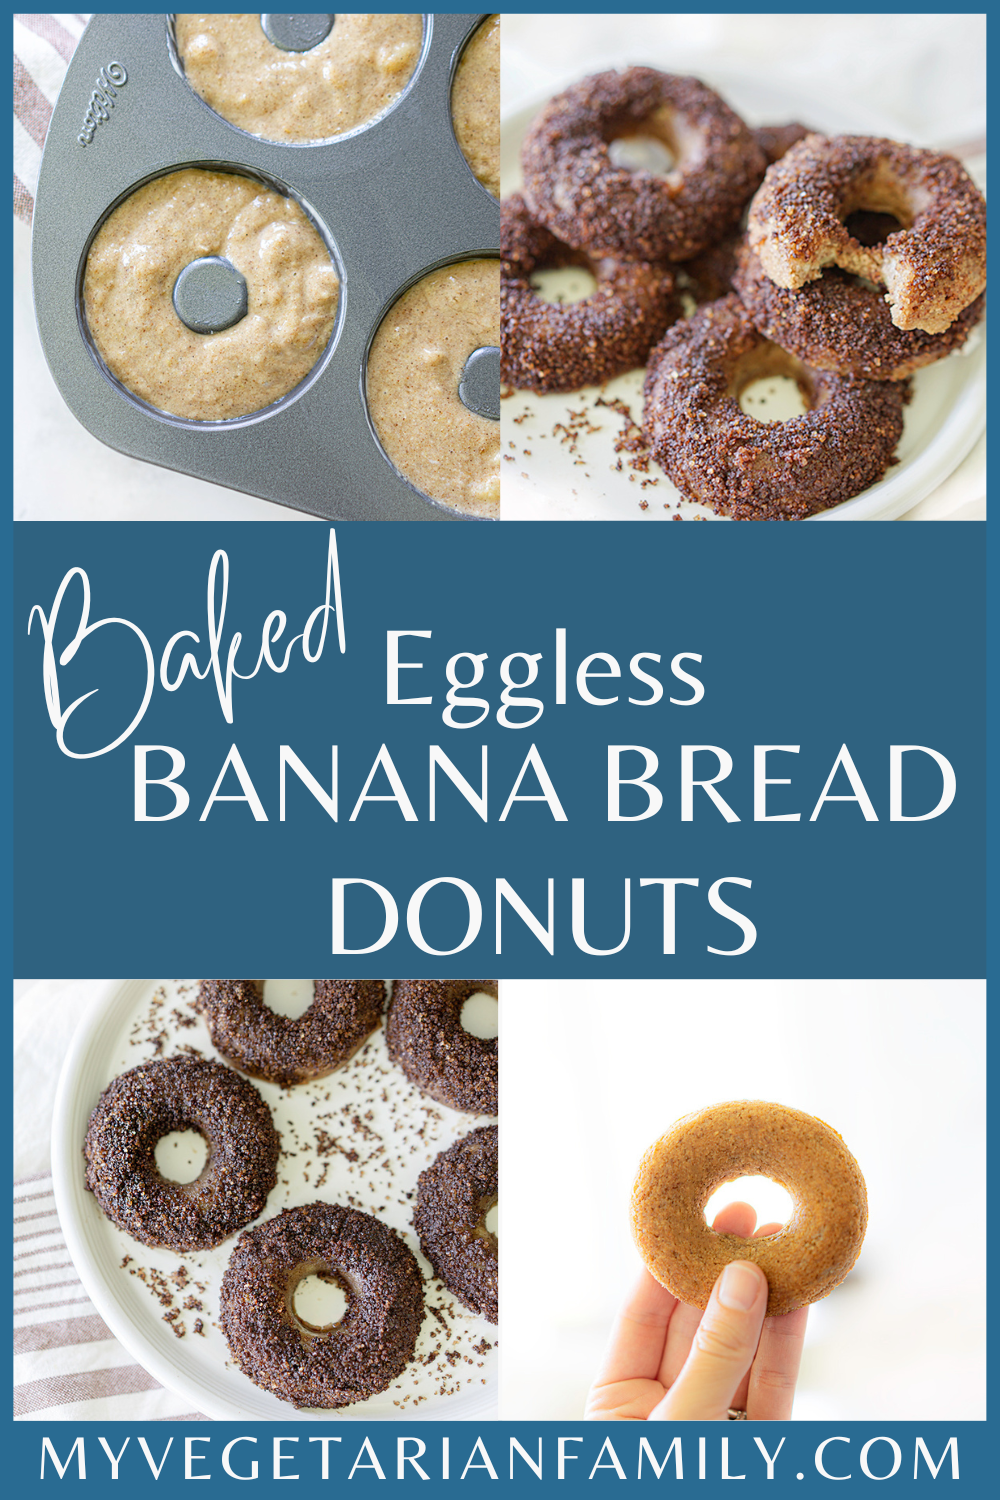 Eggless Baked Banana Bread Donuts | My Vegetarian Family #bakedbananabreaddonuts #egglessbaking